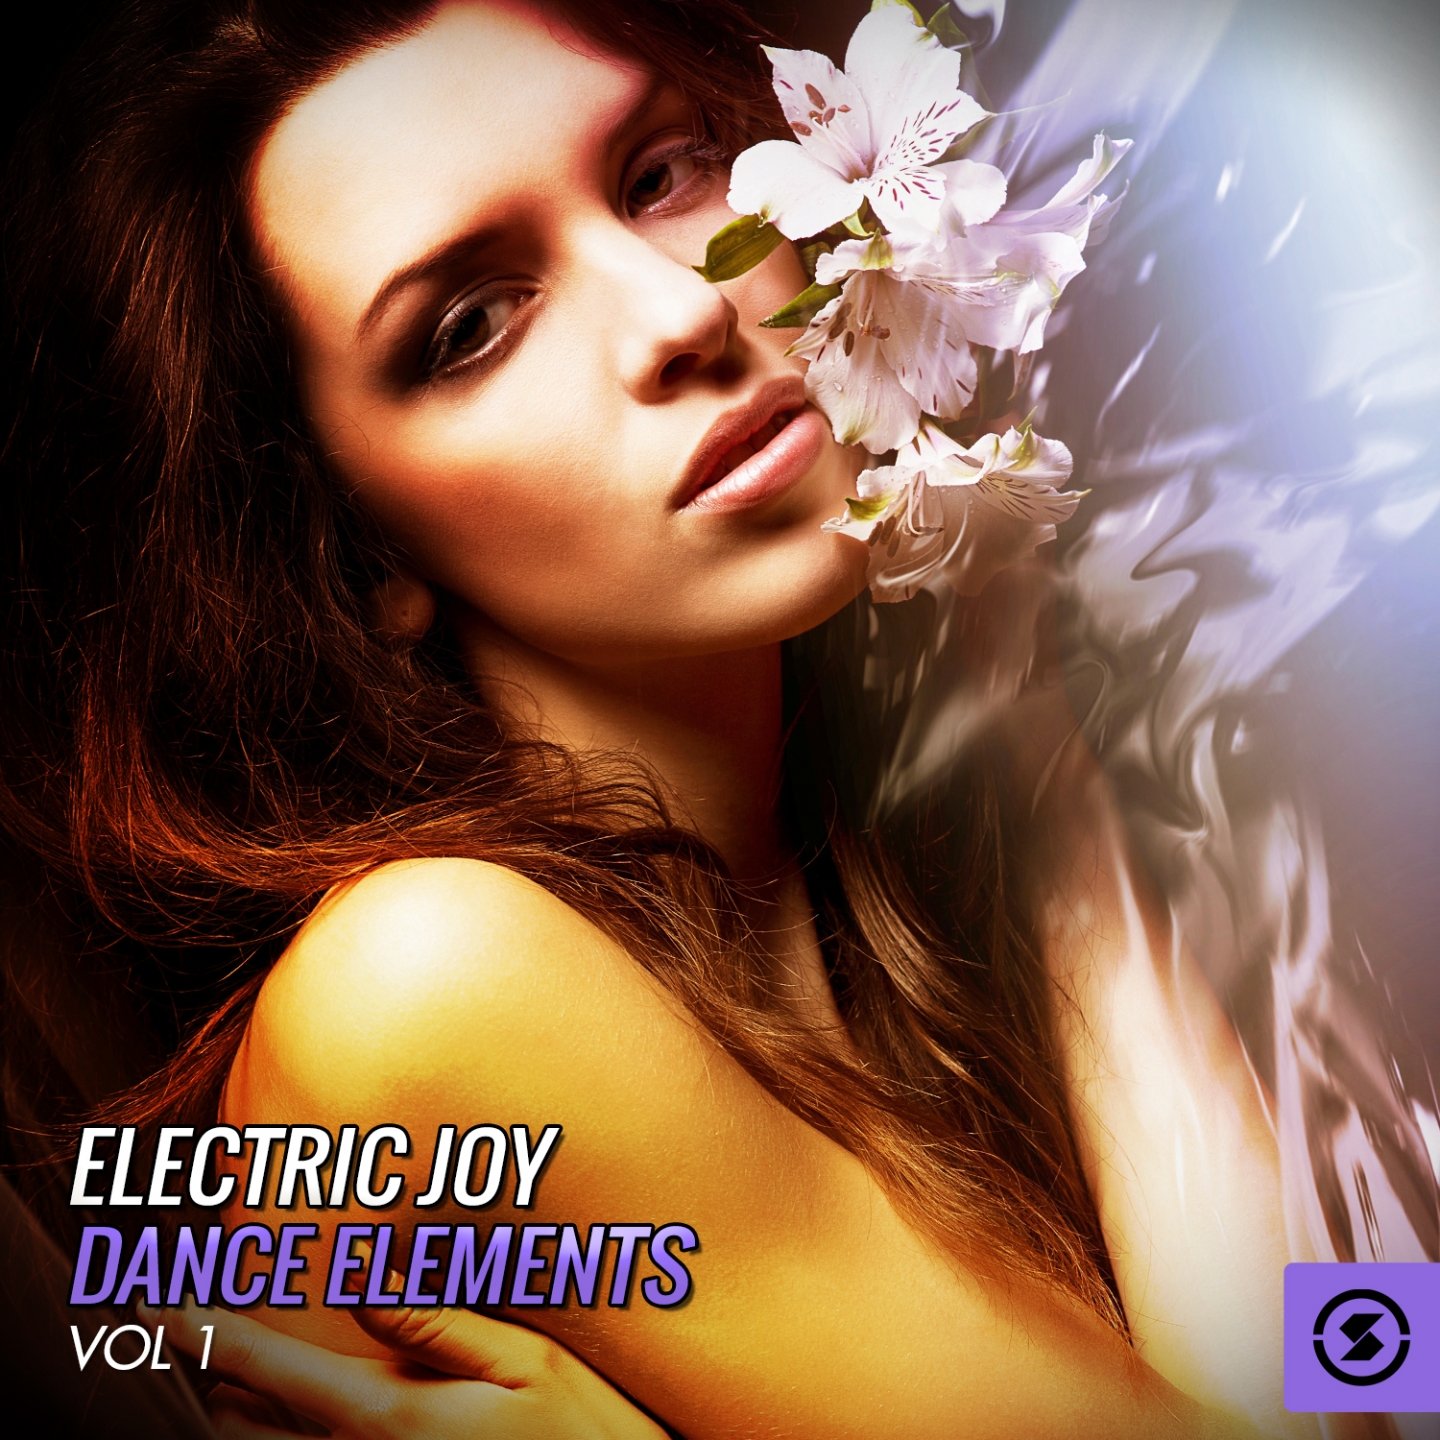 Electric Joy Dance Elements, Vol. 1